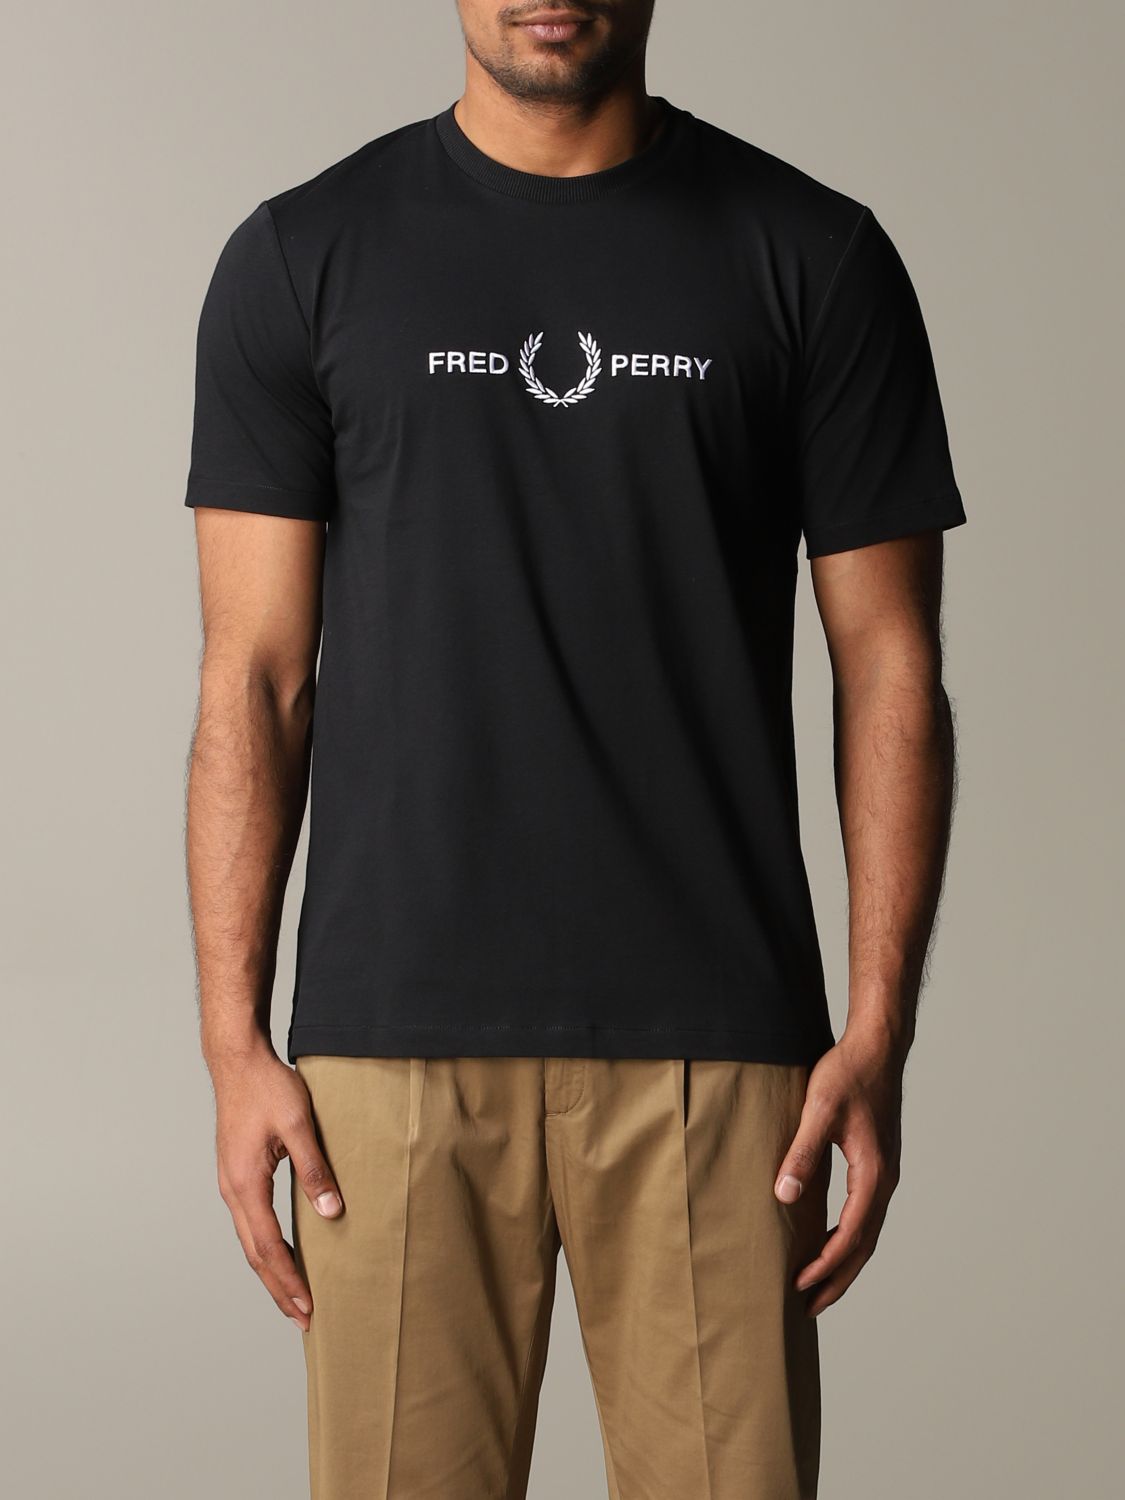 Outlet de Fred Camiseta hombre, Negro Camiseta Fred Perry M7514 en en GIGLIO.COM